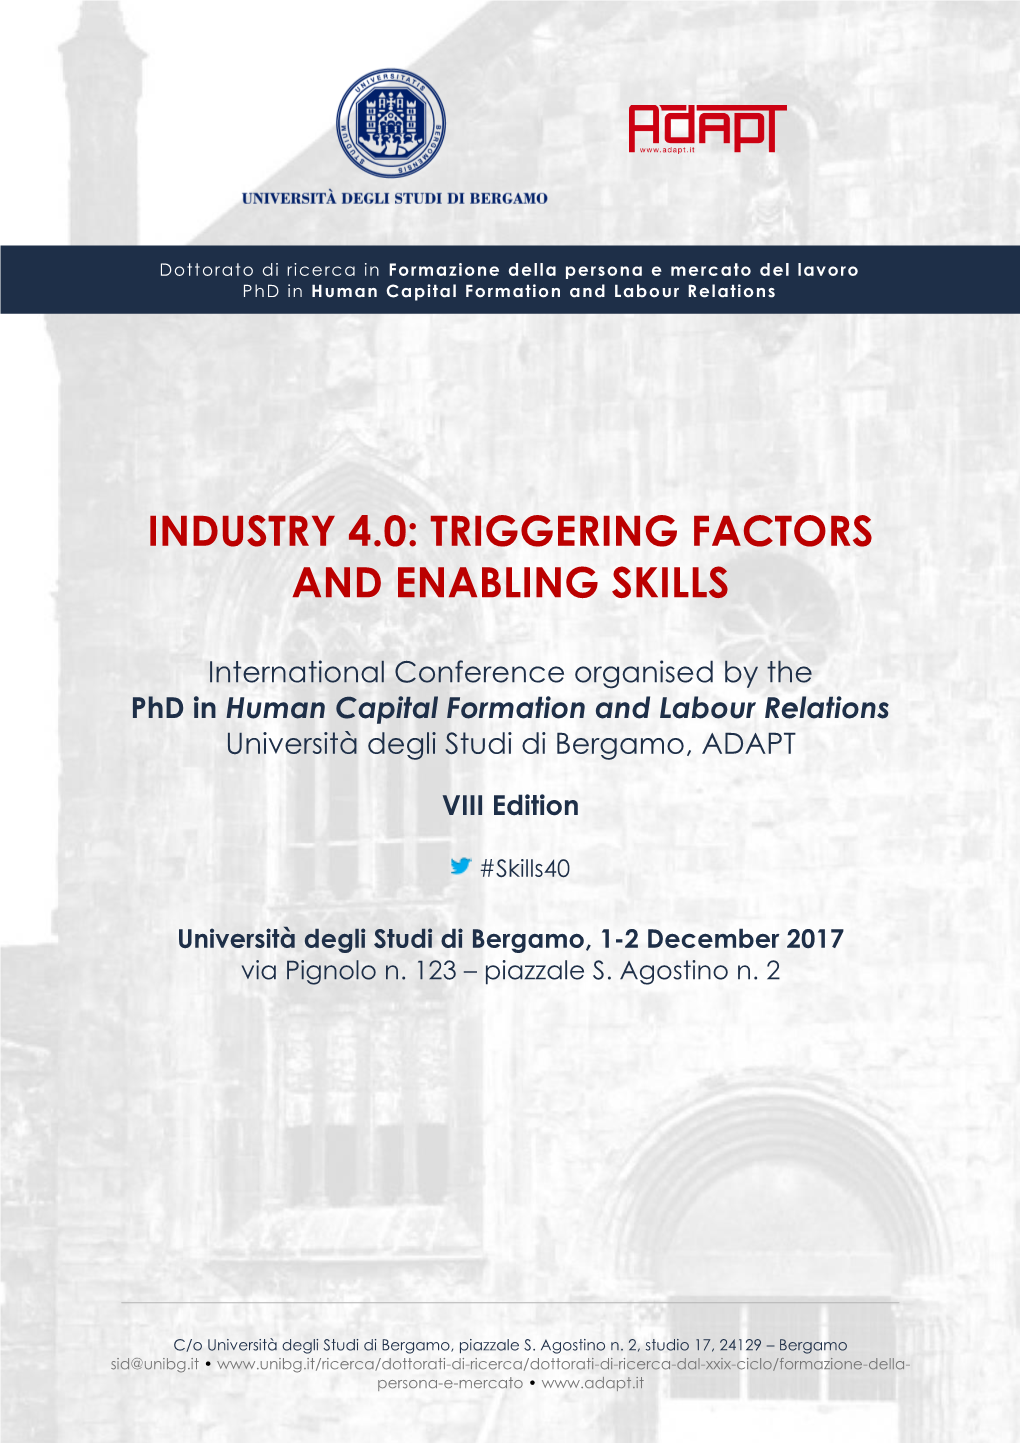 Industry 4.0: Triggering Factors and Enabling Skills